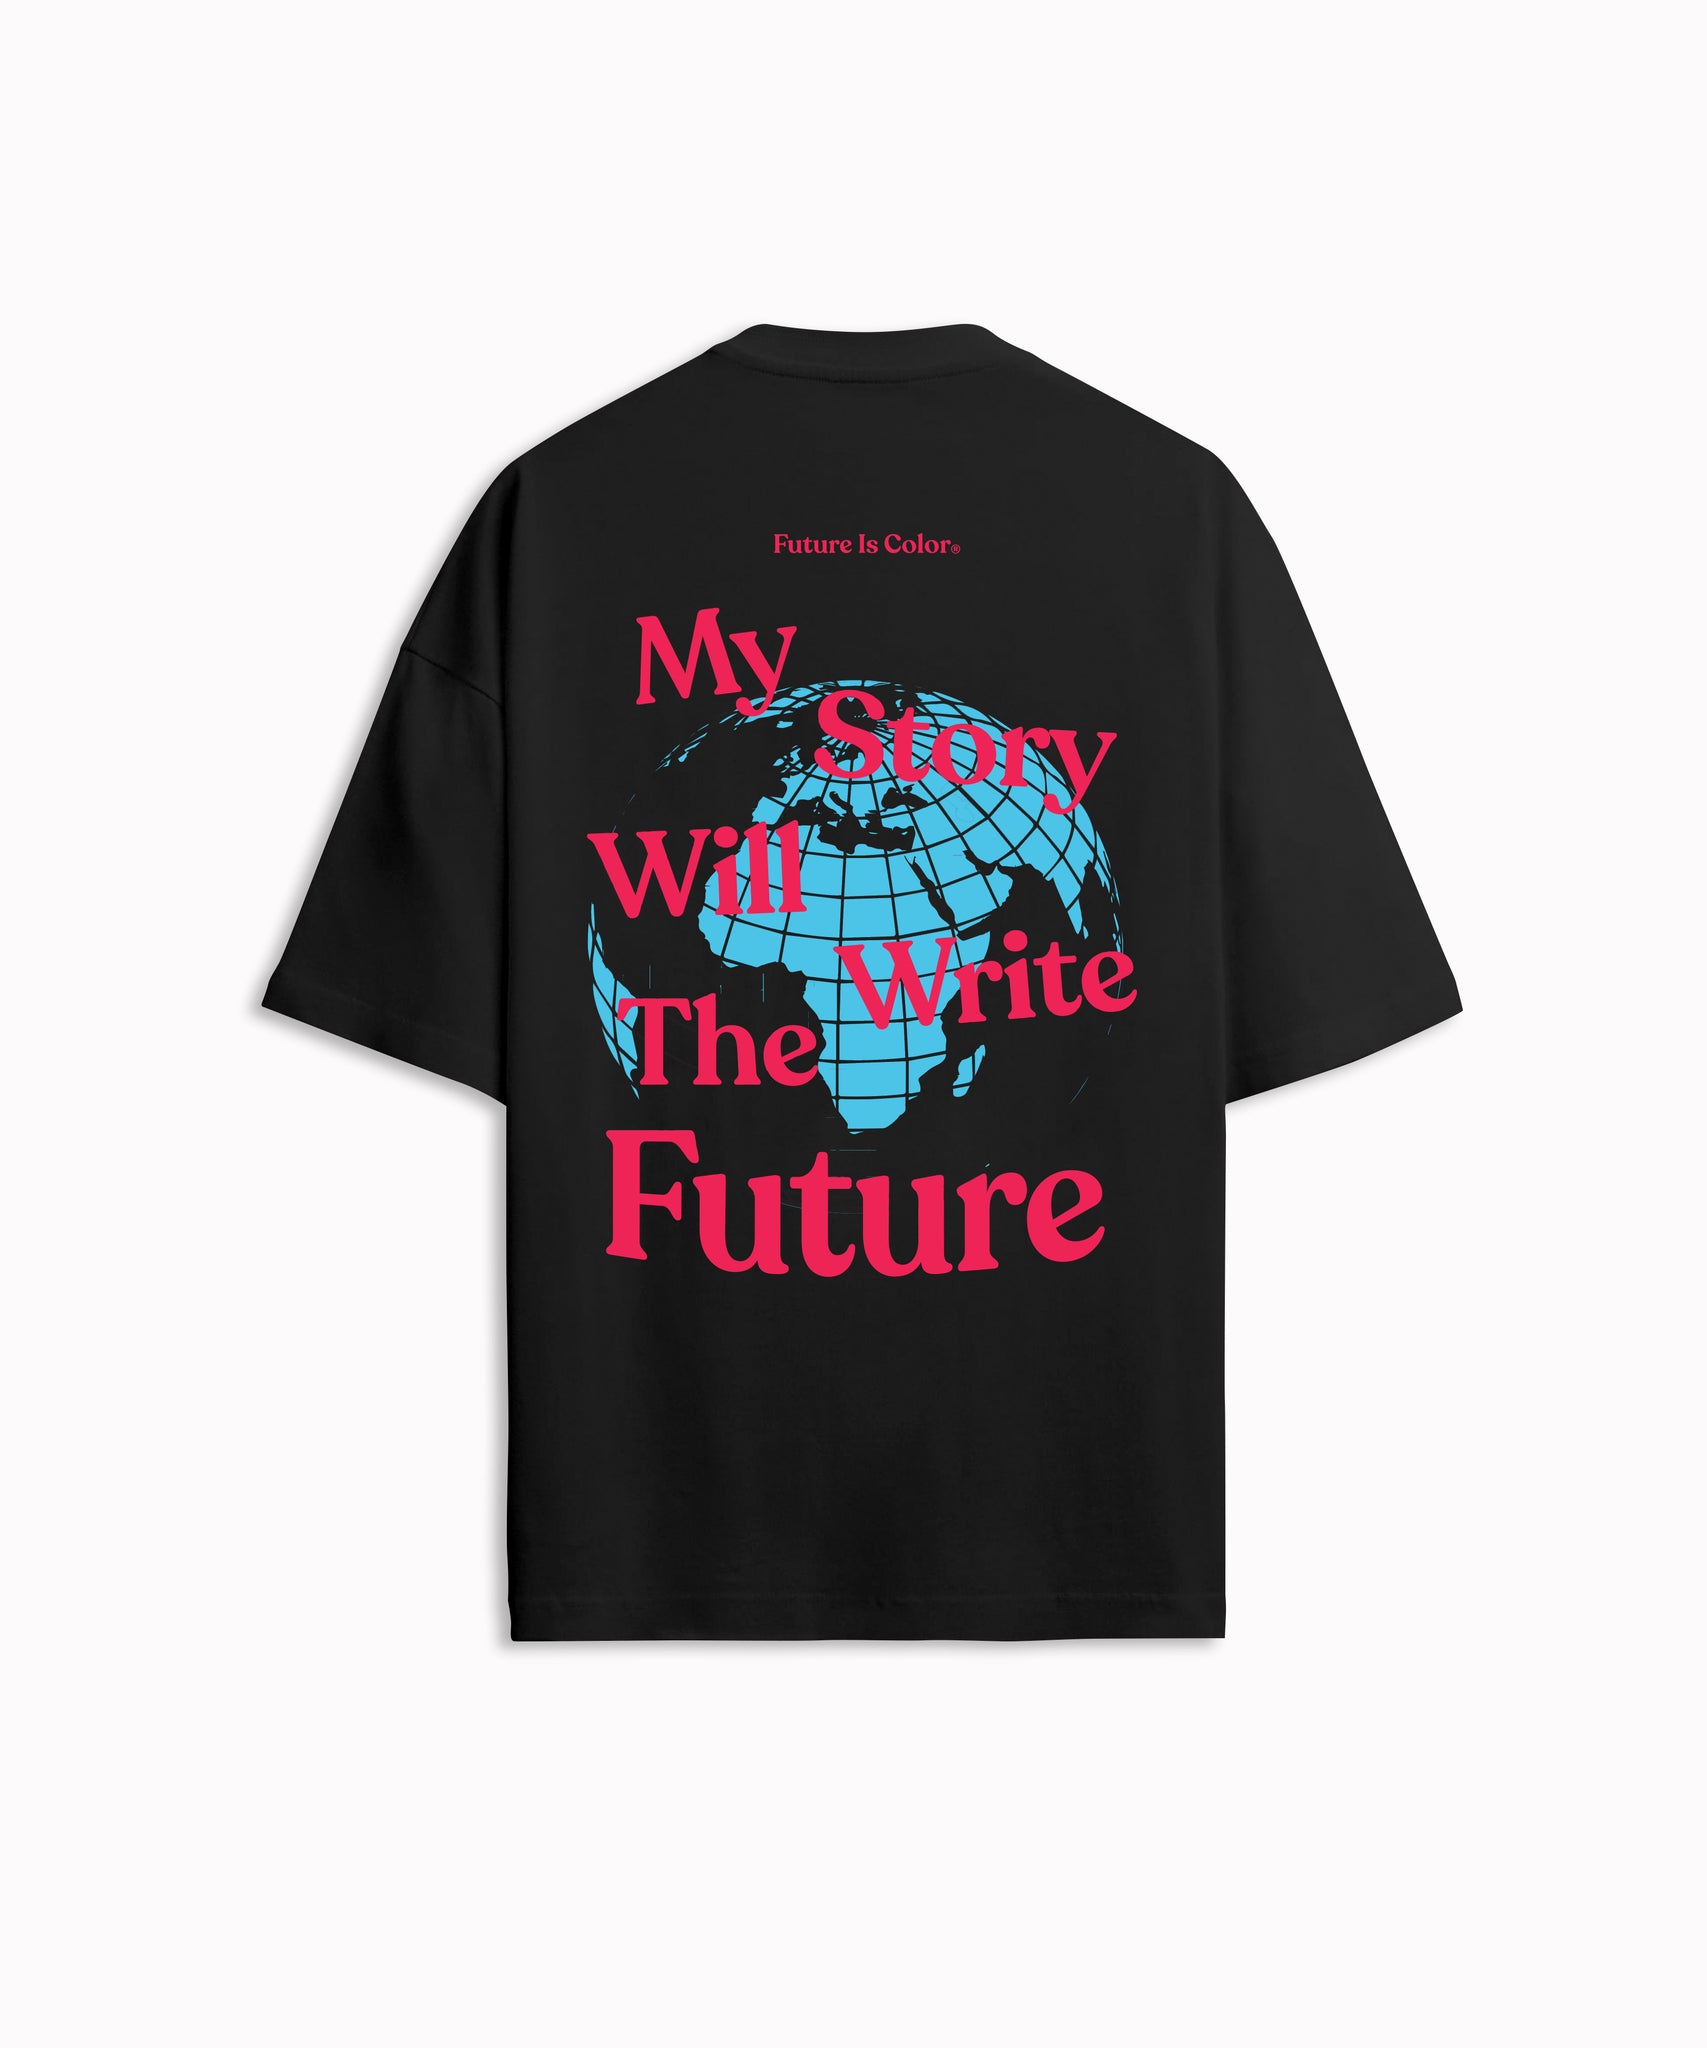 My Story Writes The Future Shirt